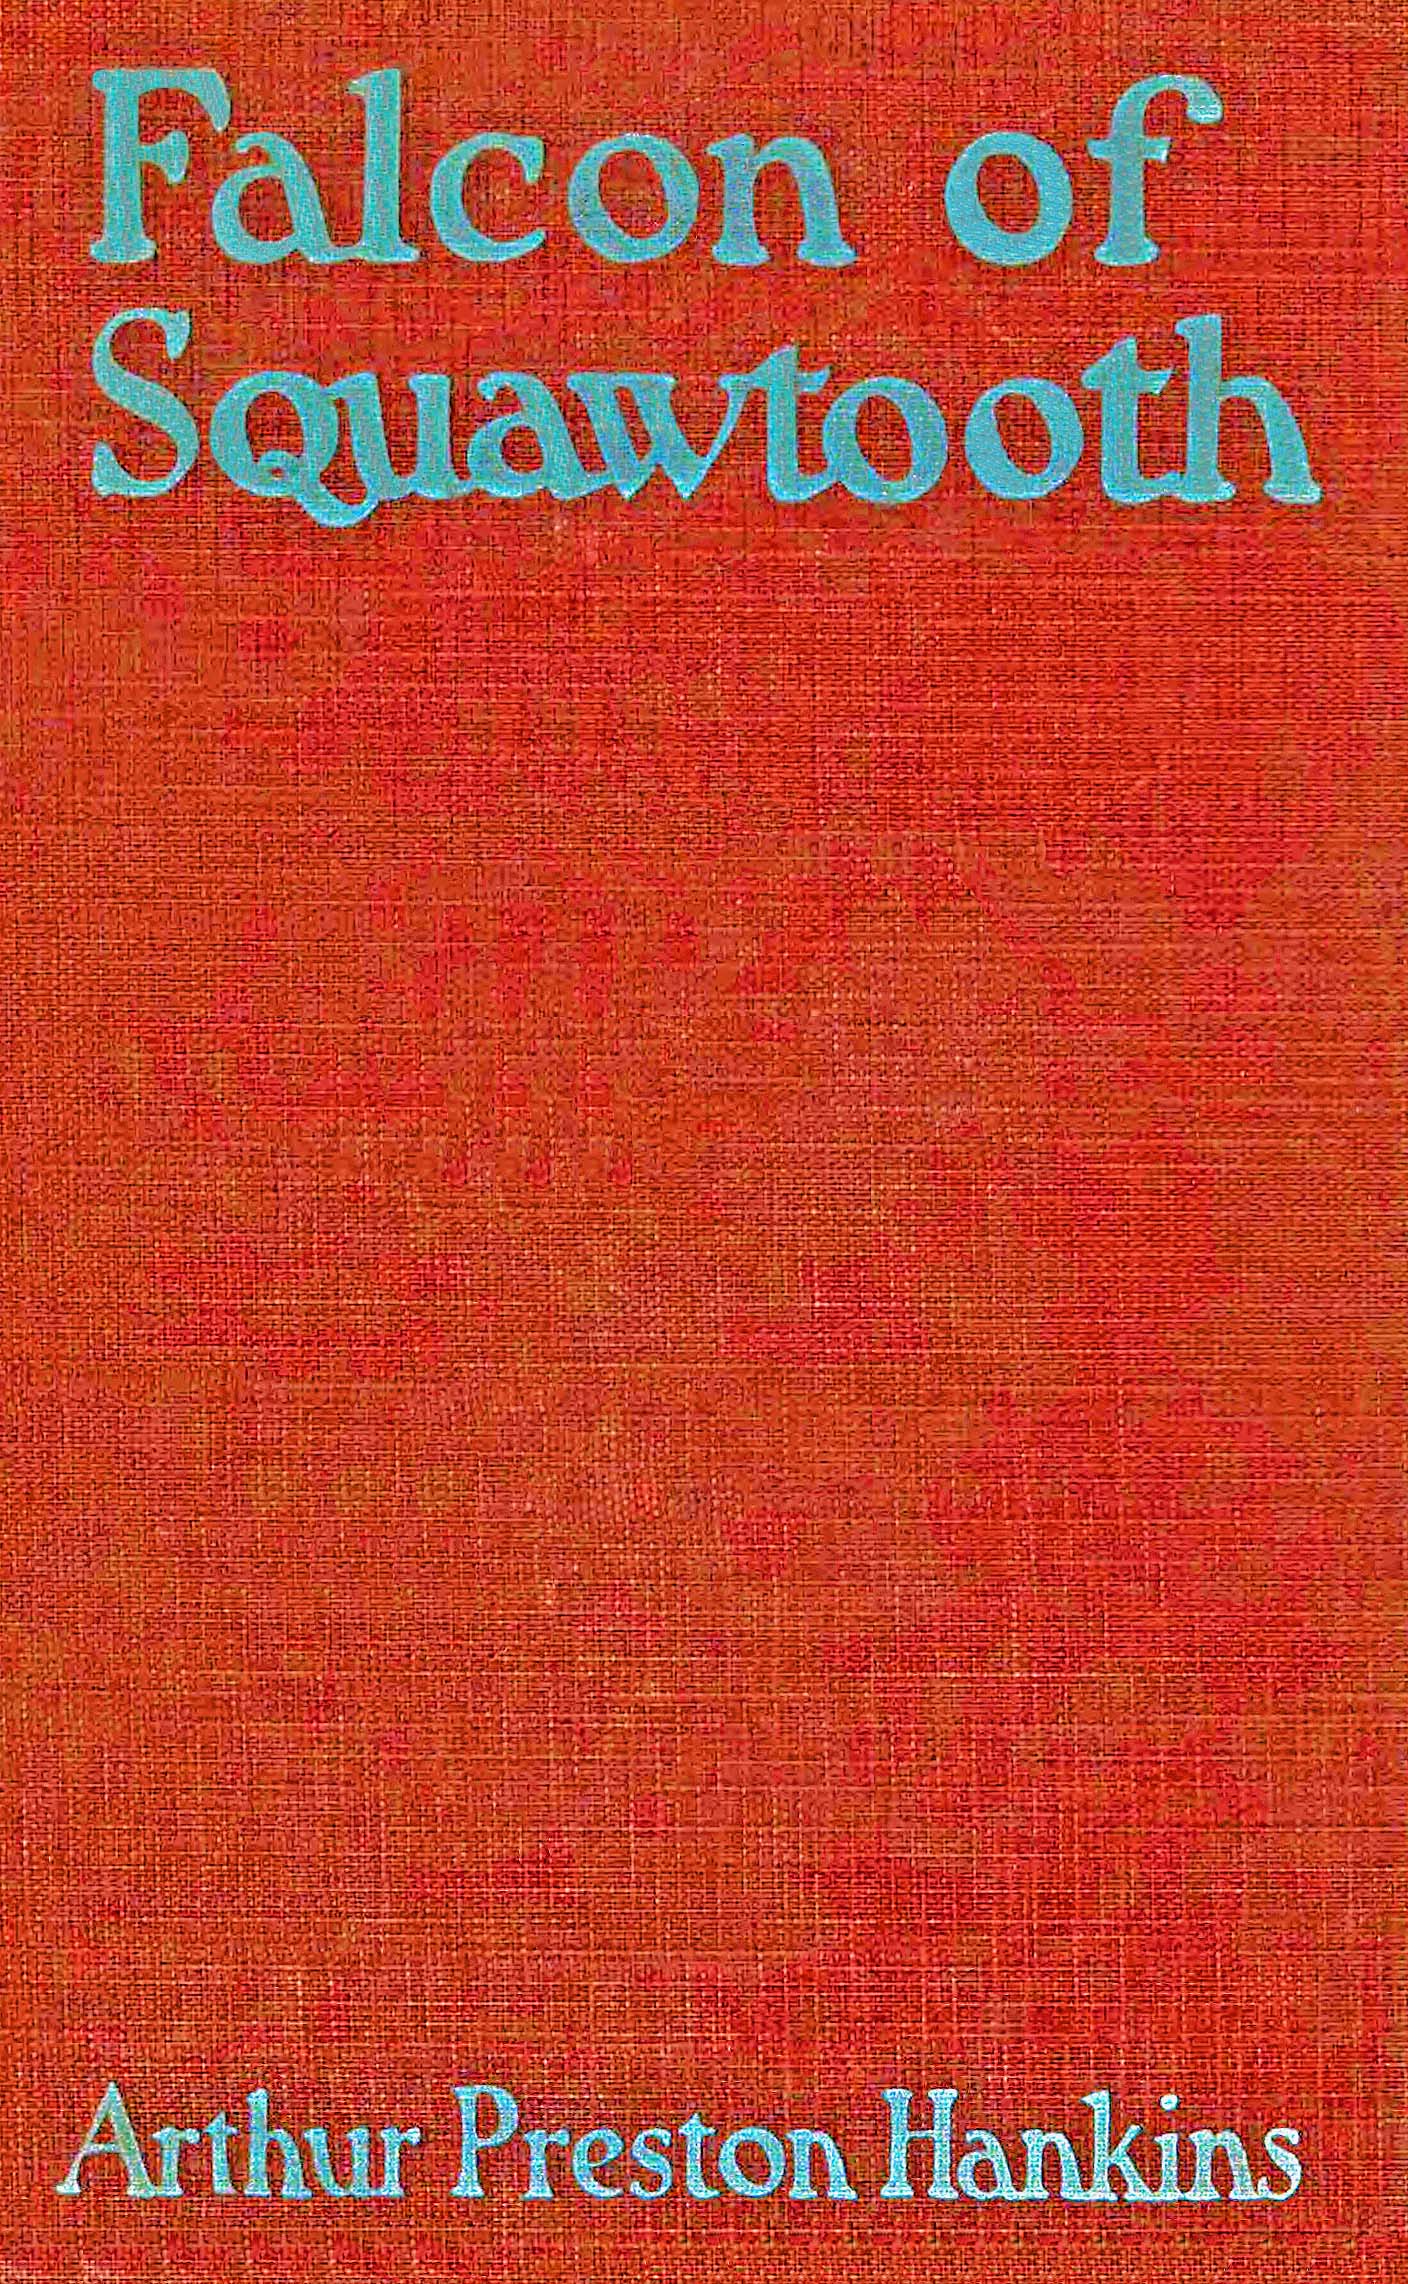 Falcon, of Squawtooth